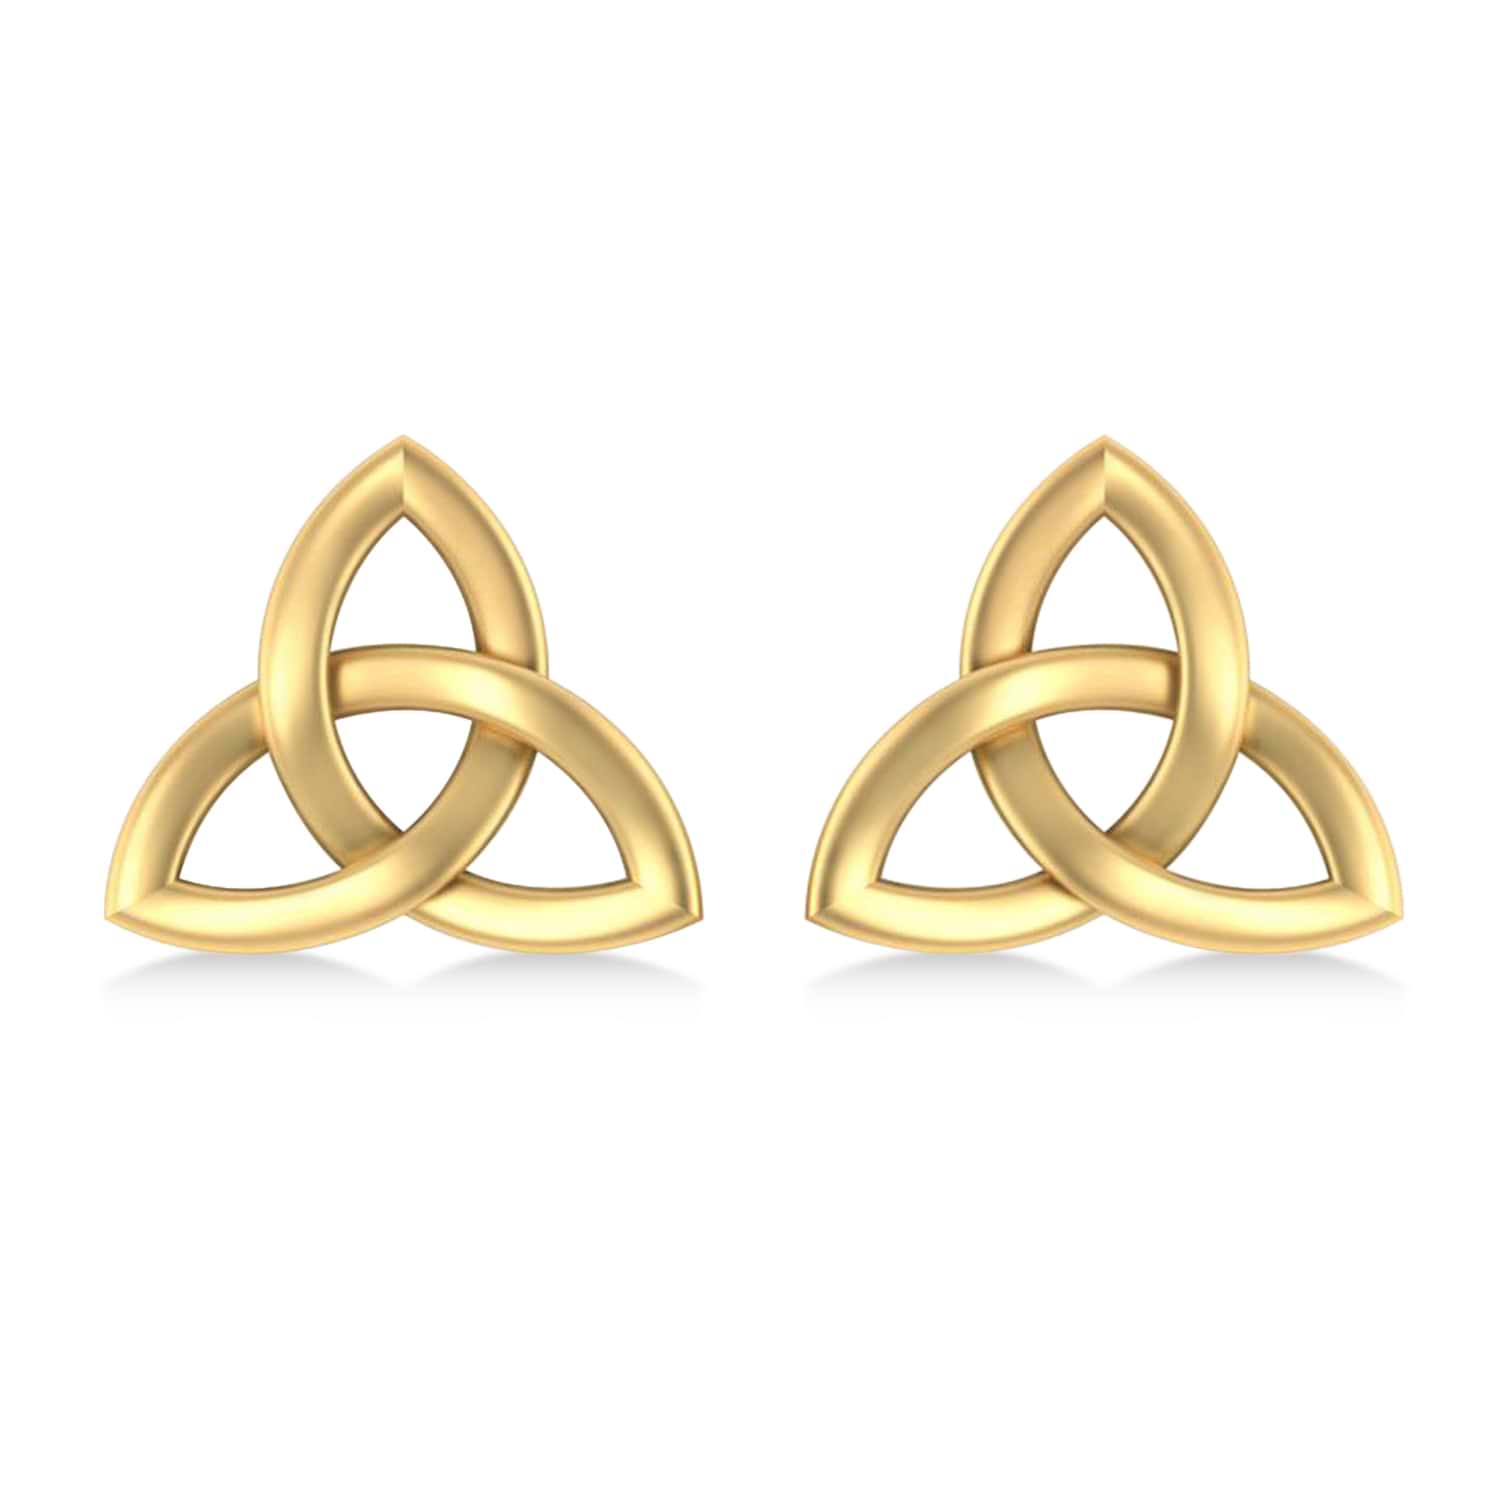 Celtic Knot Stud Earrings 14k Yellow Gold